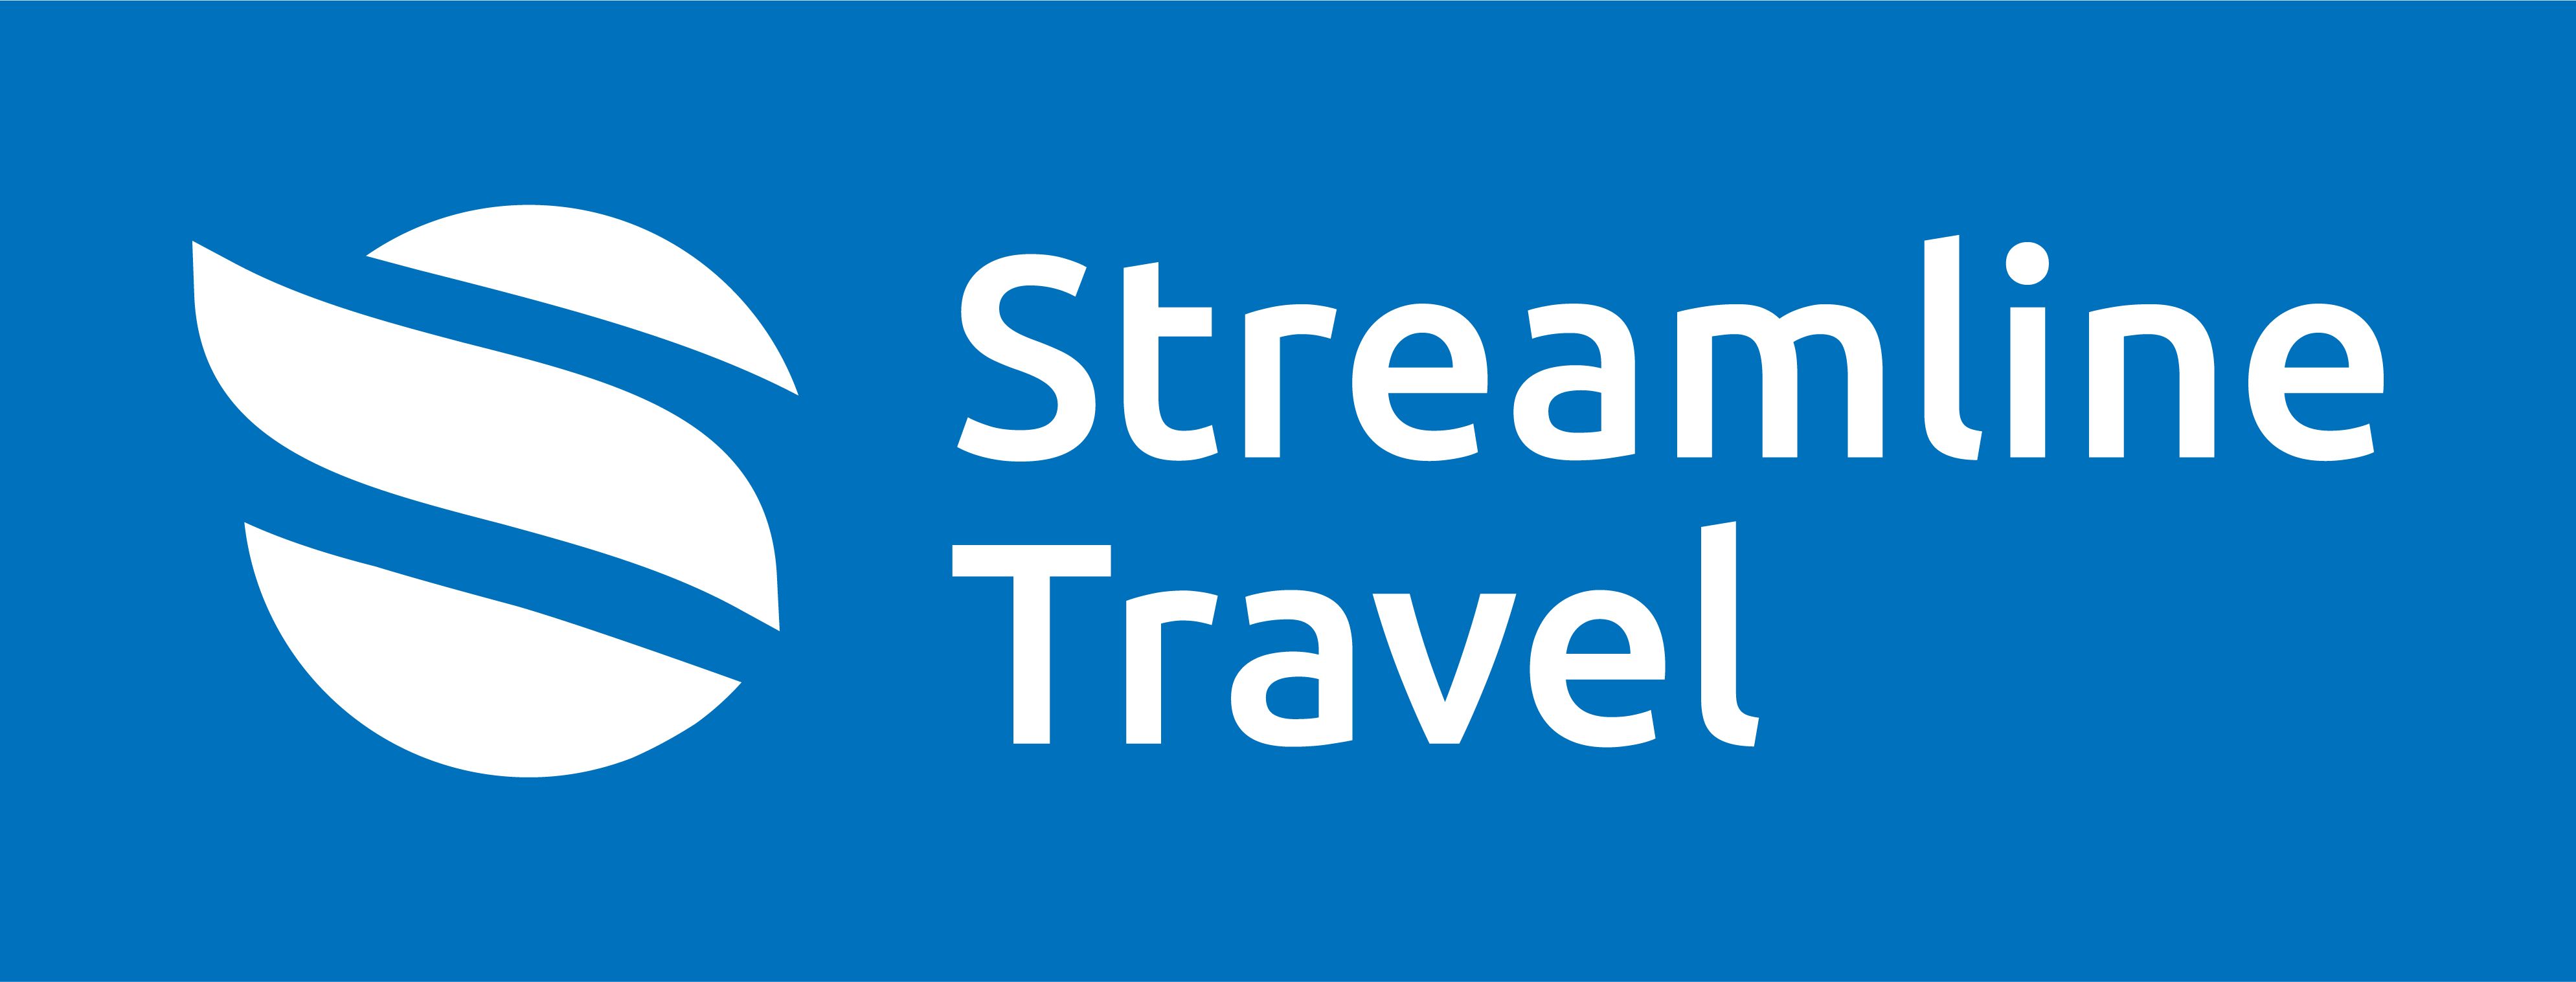 Streamline Travel Ltd